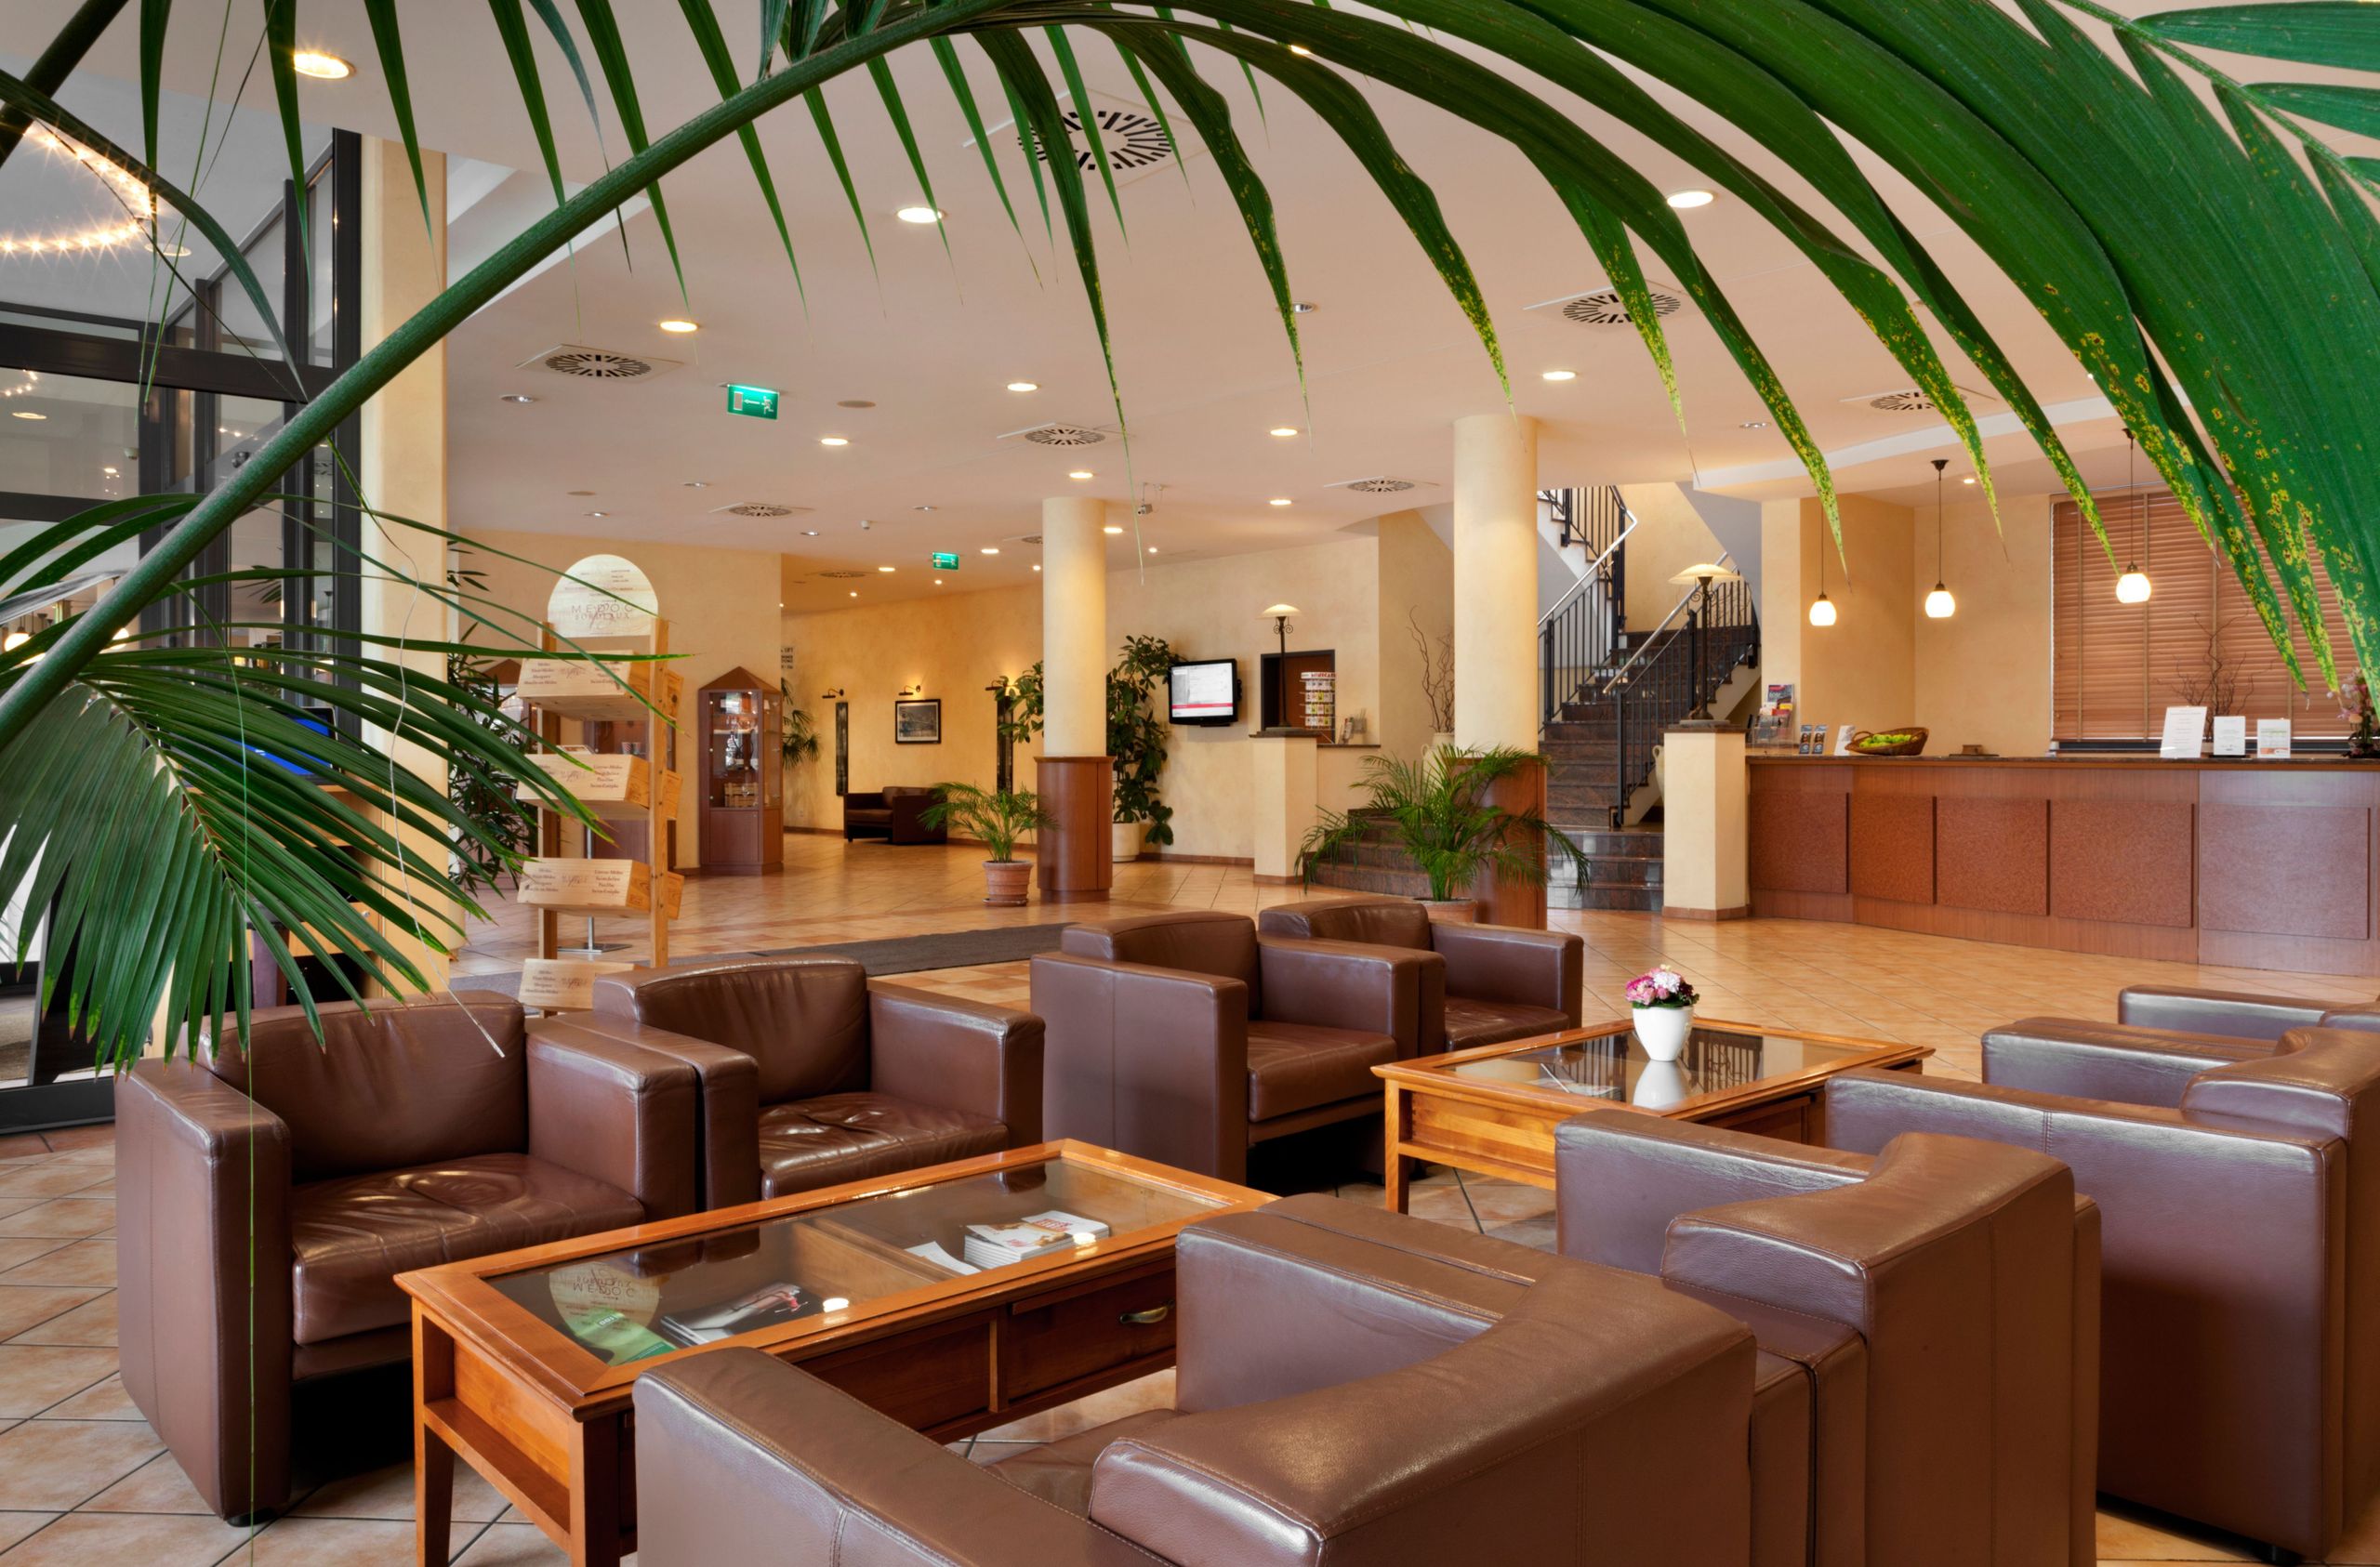 IntercityHotel Bremen - lobby - Rezeption - lounge